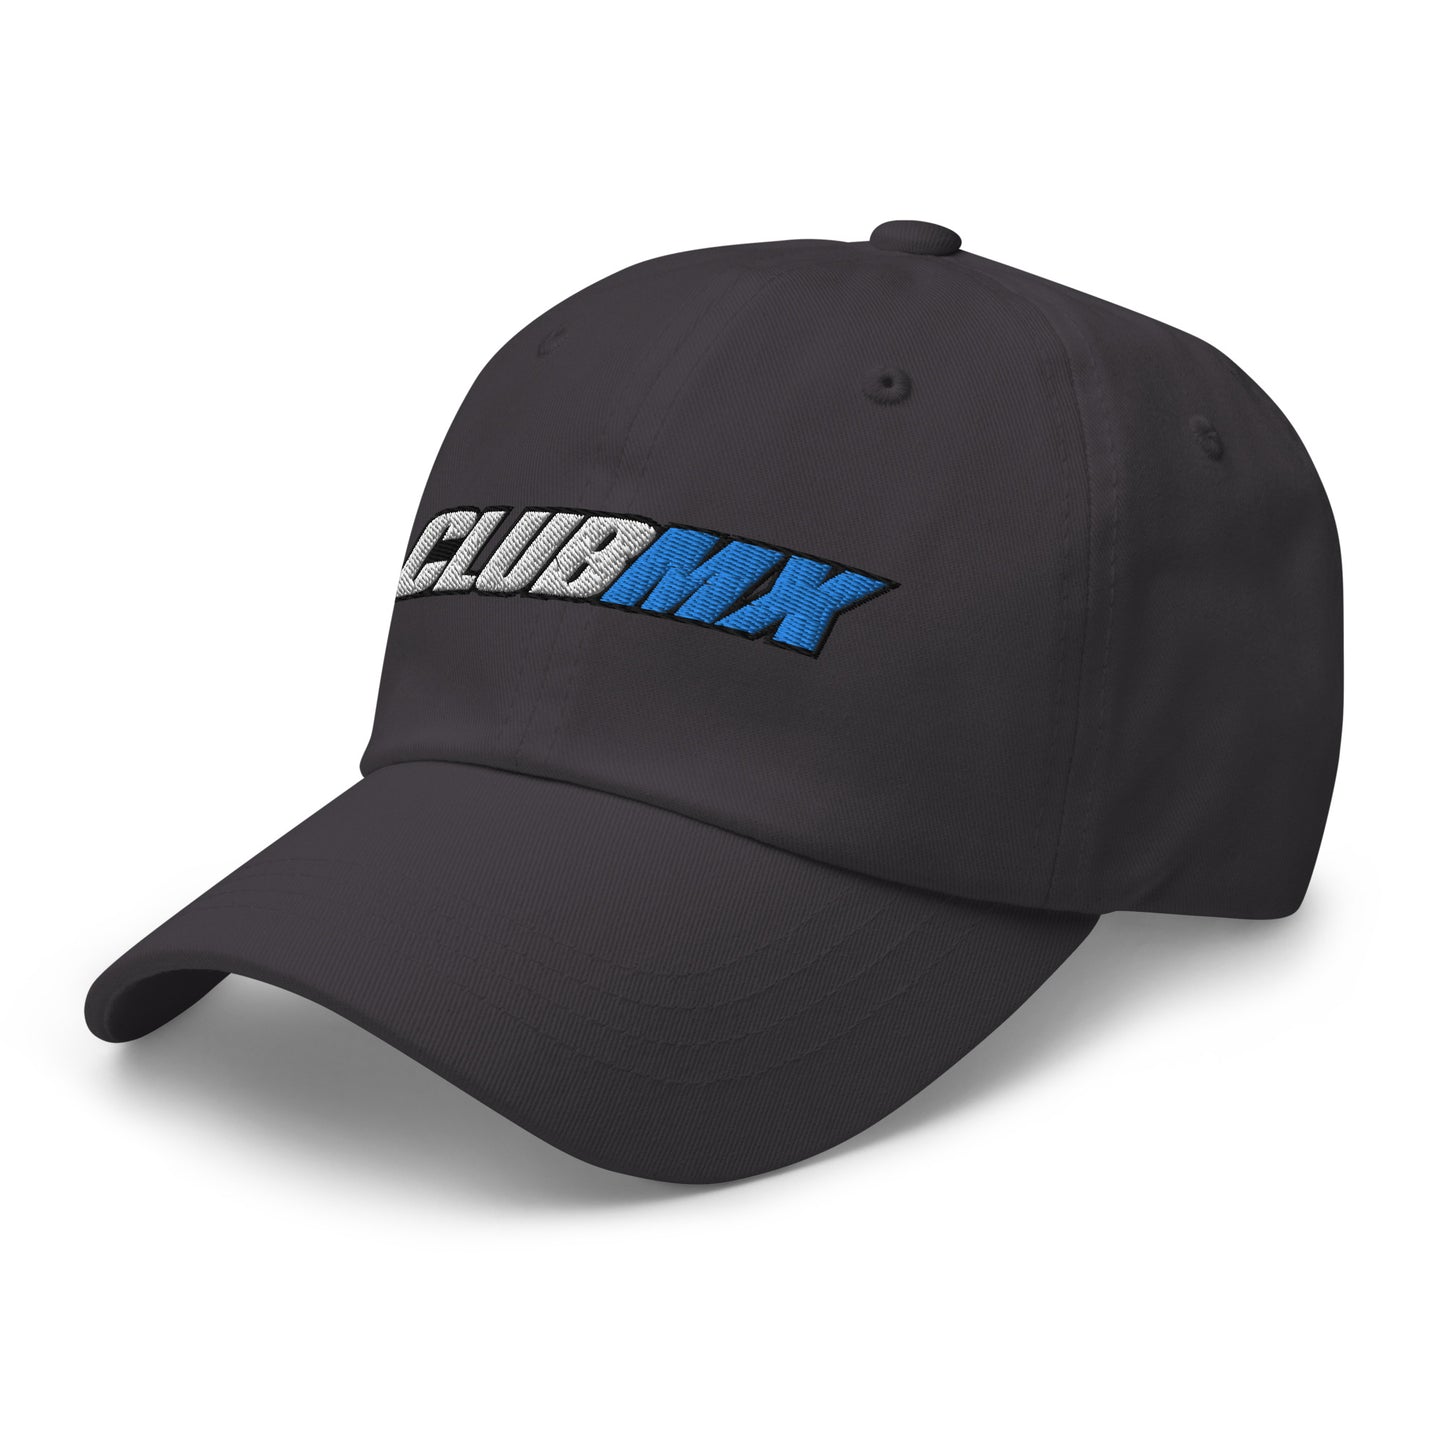 ClubMX "Dad Hat"